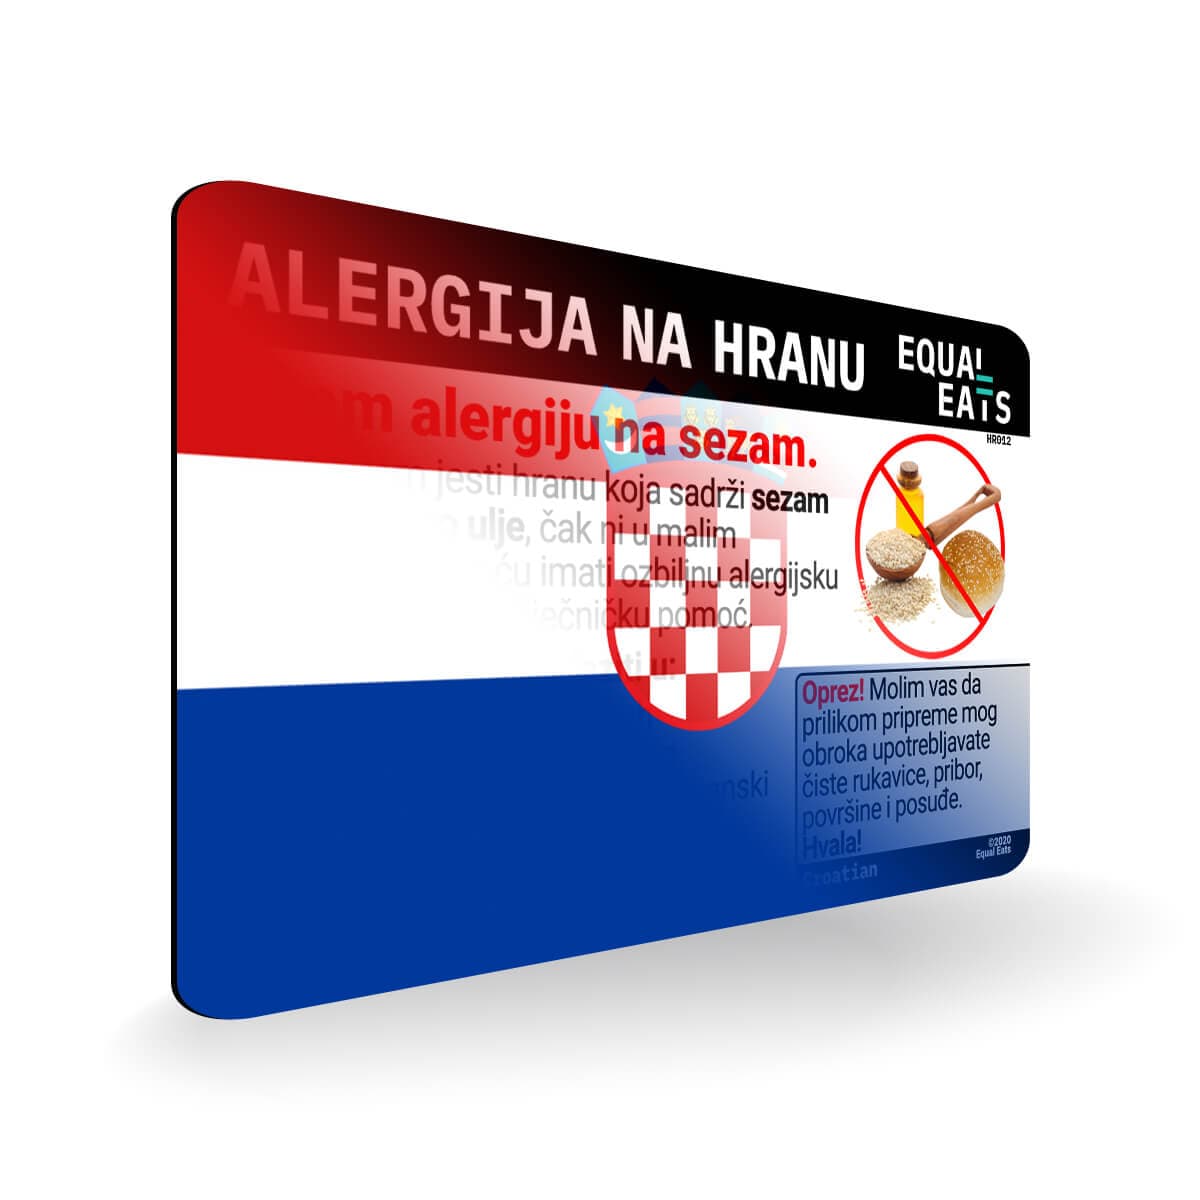 Sesame Allergy in Croatian. Sesame Allergy Card for Croatia